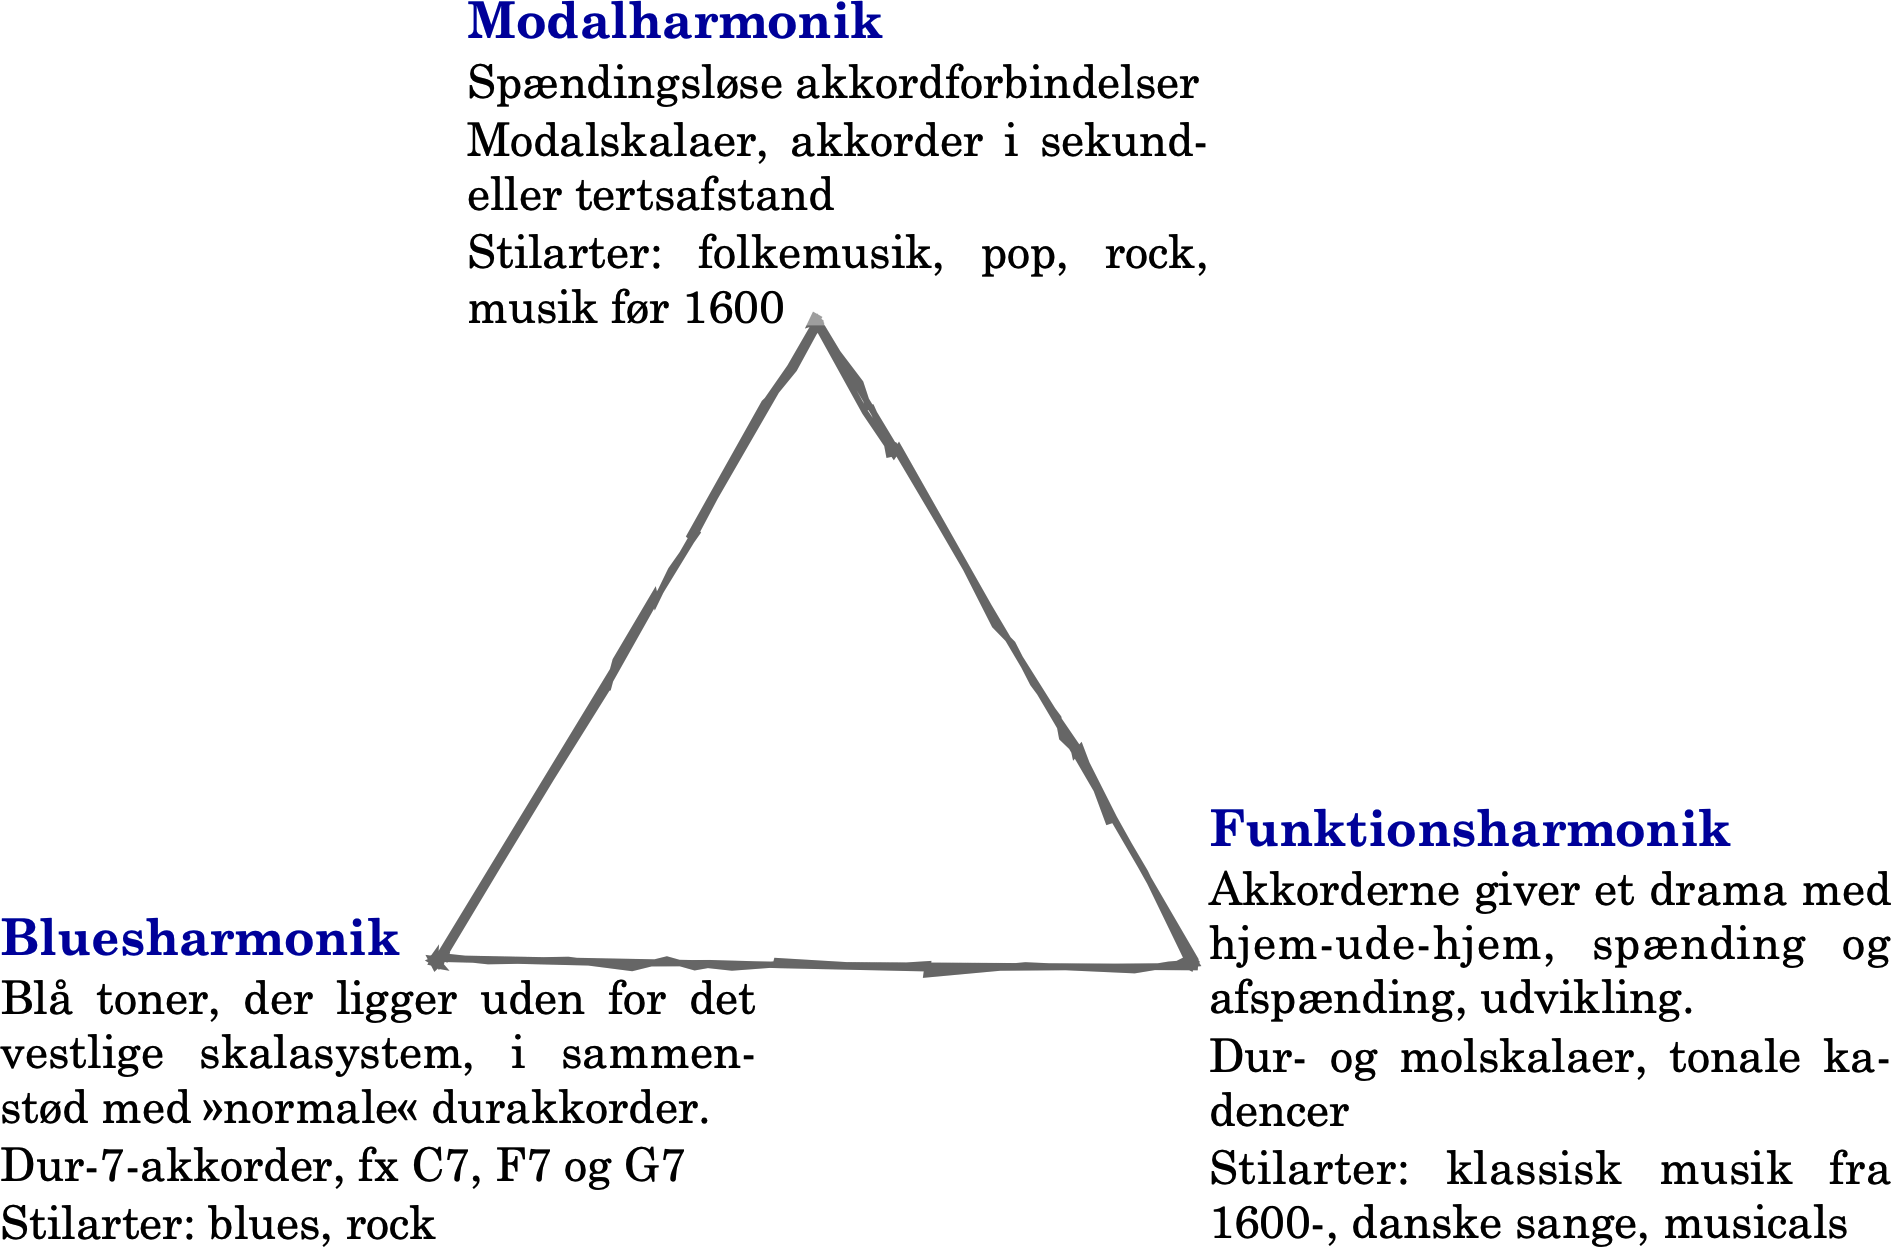 Den harmoniske trekant